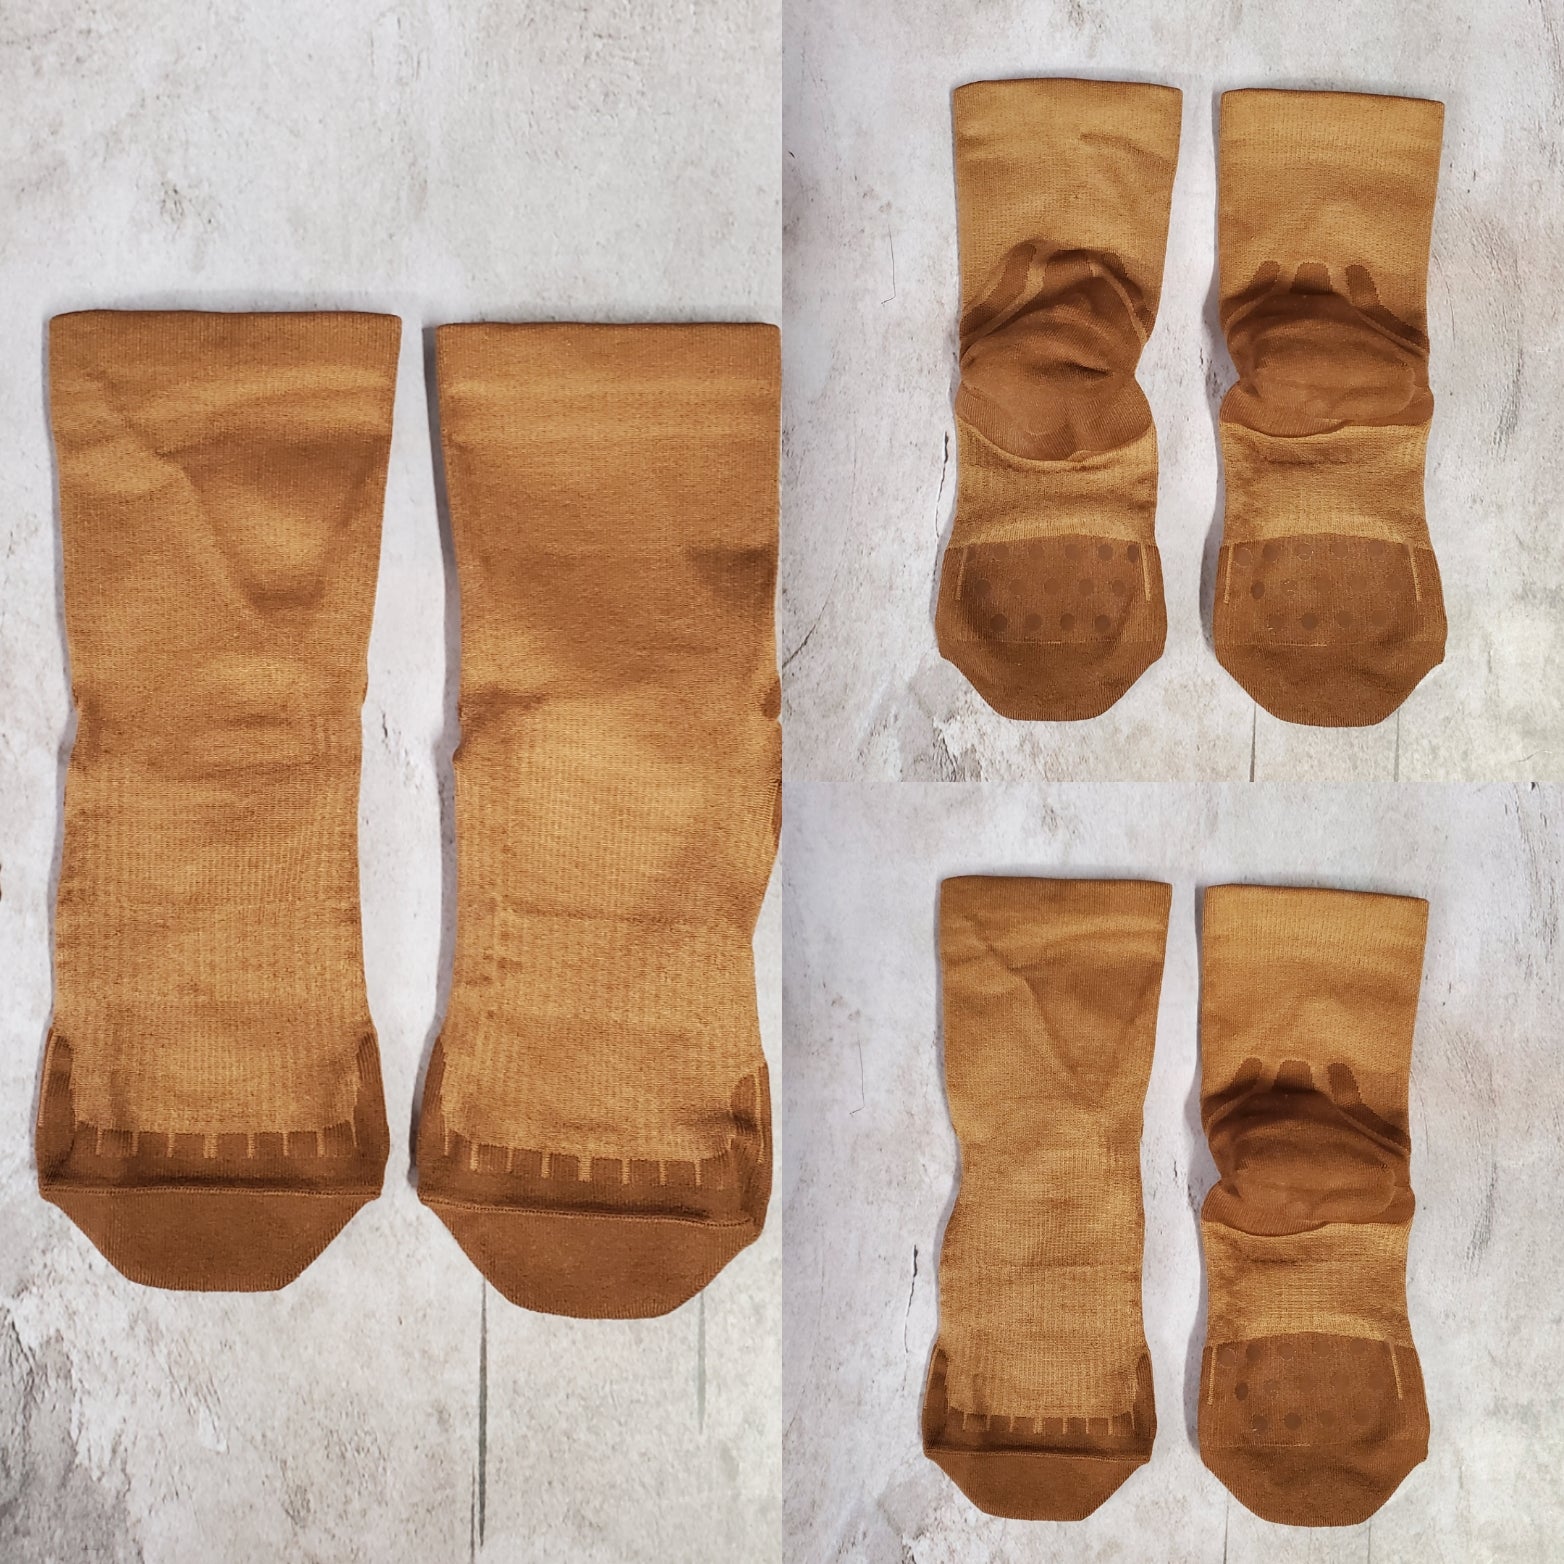 Socks, Capezio, Toe Quality Spa Socks BH1501, $20.00, from VEdance